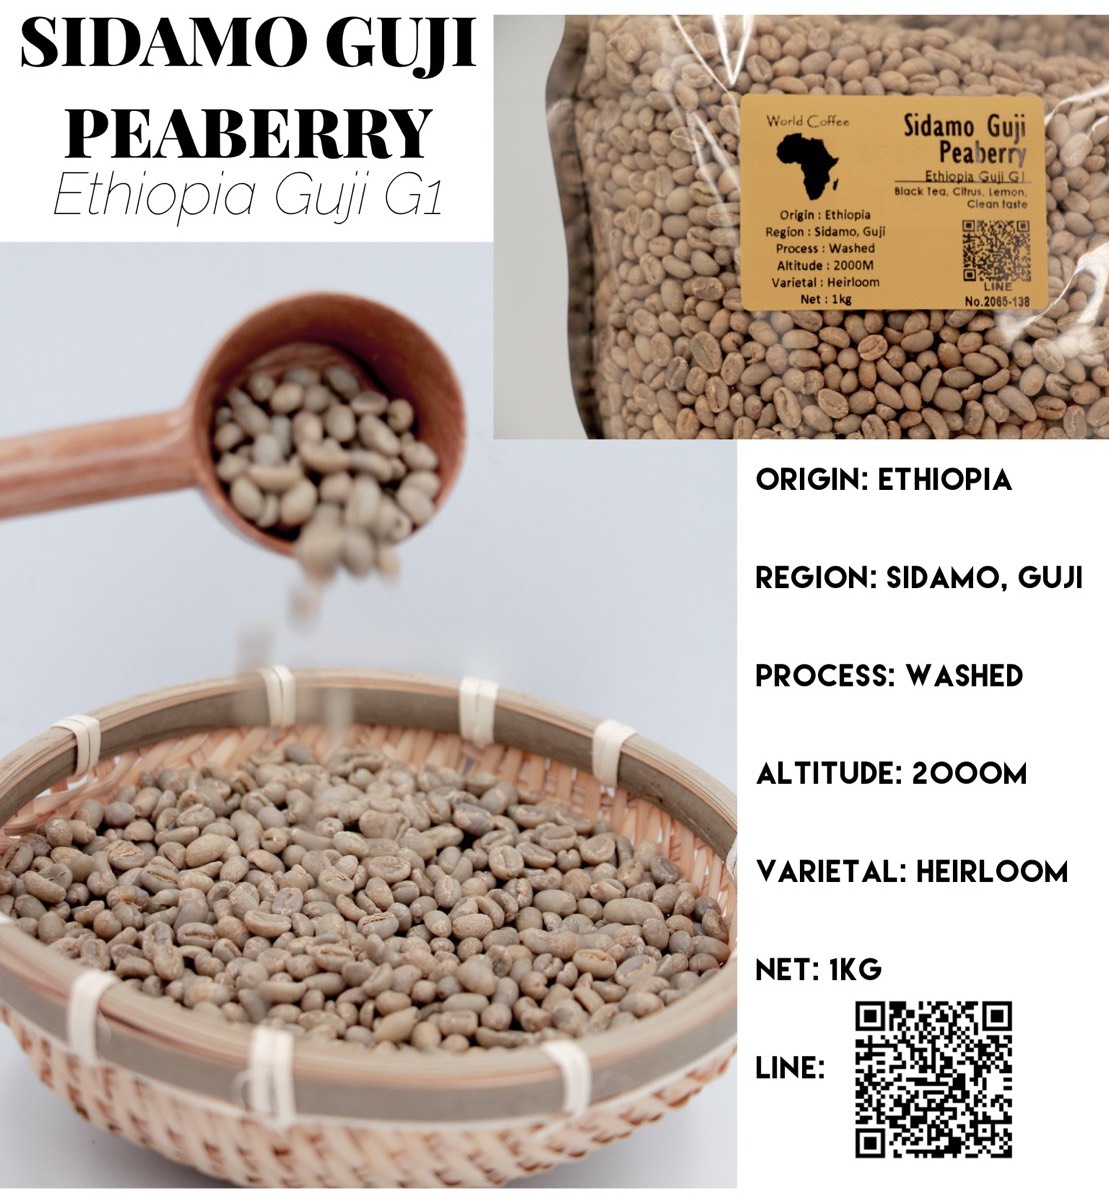 *NEW* พร้อมส่ง เมล็ดกาแฟดิบ Sidamo Guji Peaberry Washed process ขนาด 1kg. / เมล็ดกาแฟนอก/ เมล็ดกาแฟสาร เอธิโอเปีย/  Sidamo Guji Peaberry green beans 1kg